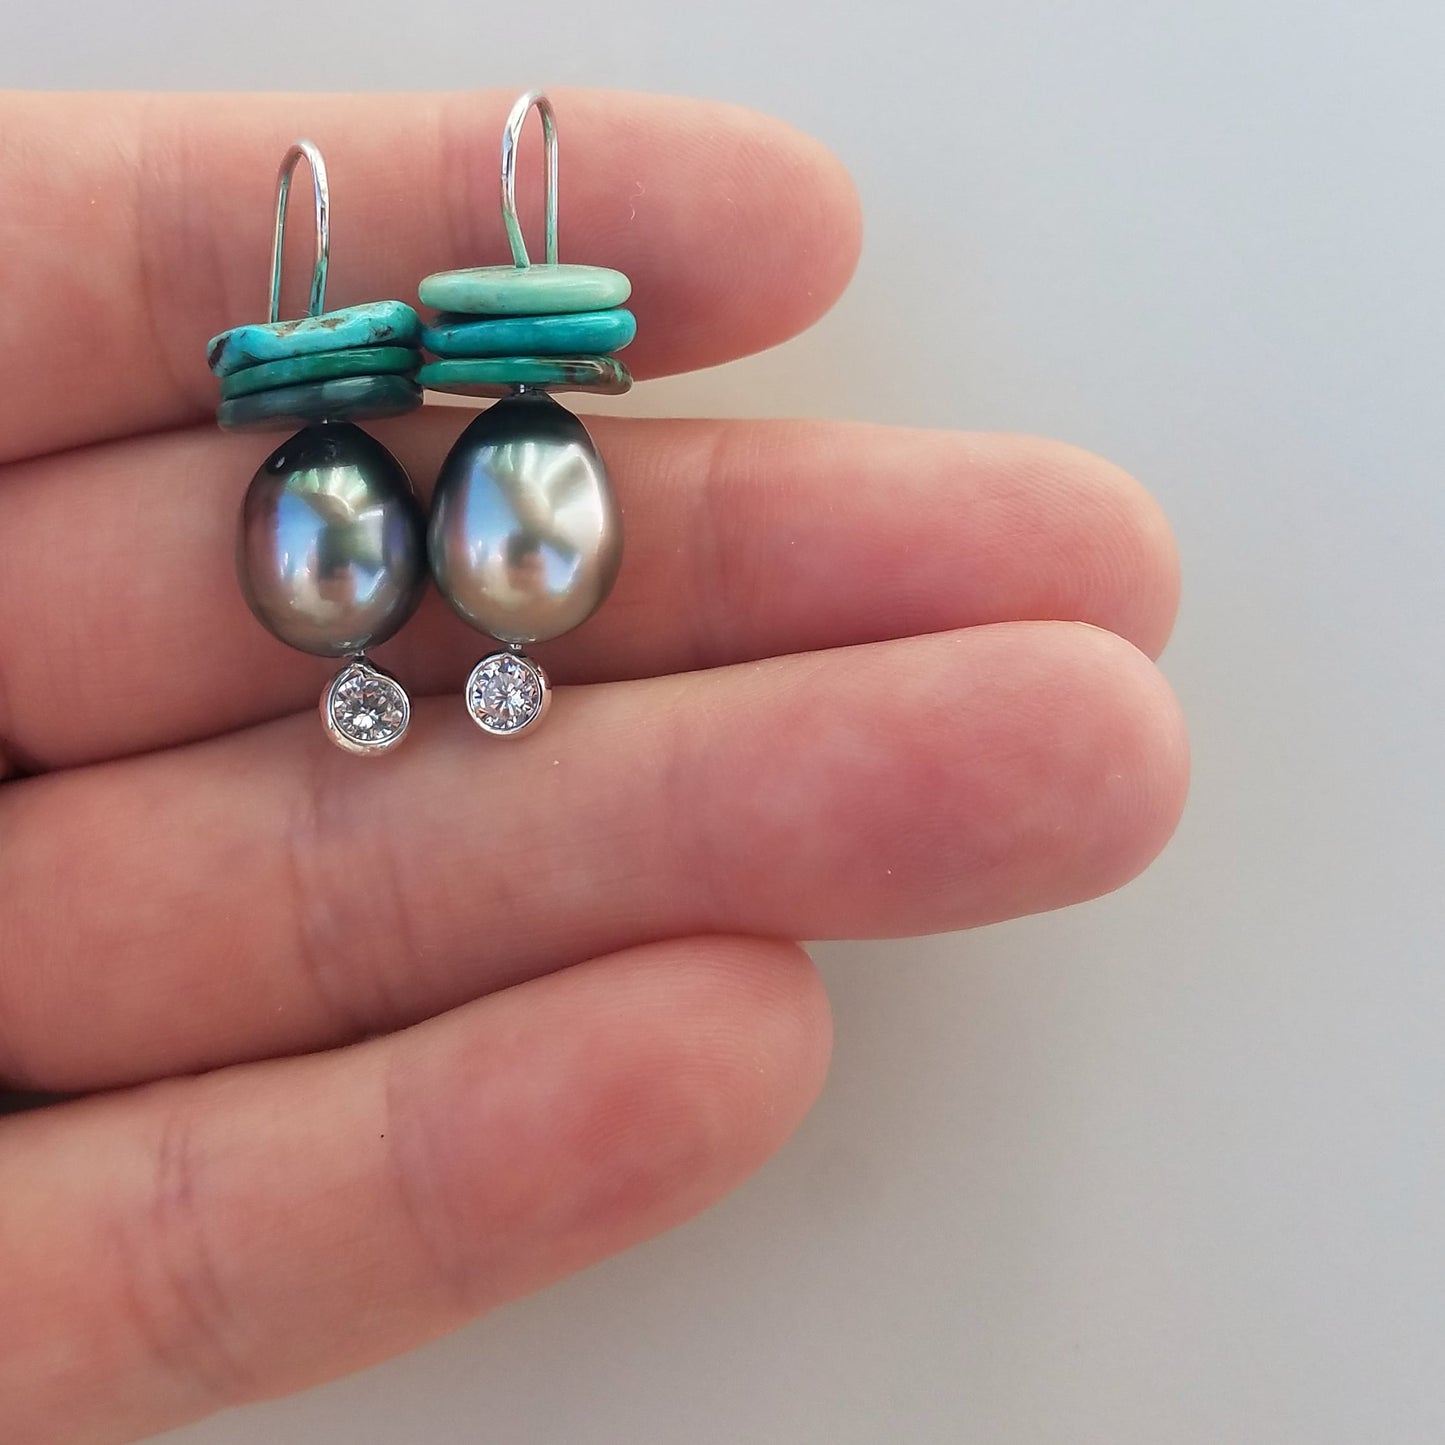 Small Tahitian Pearl & Turquoise Disc Earrings